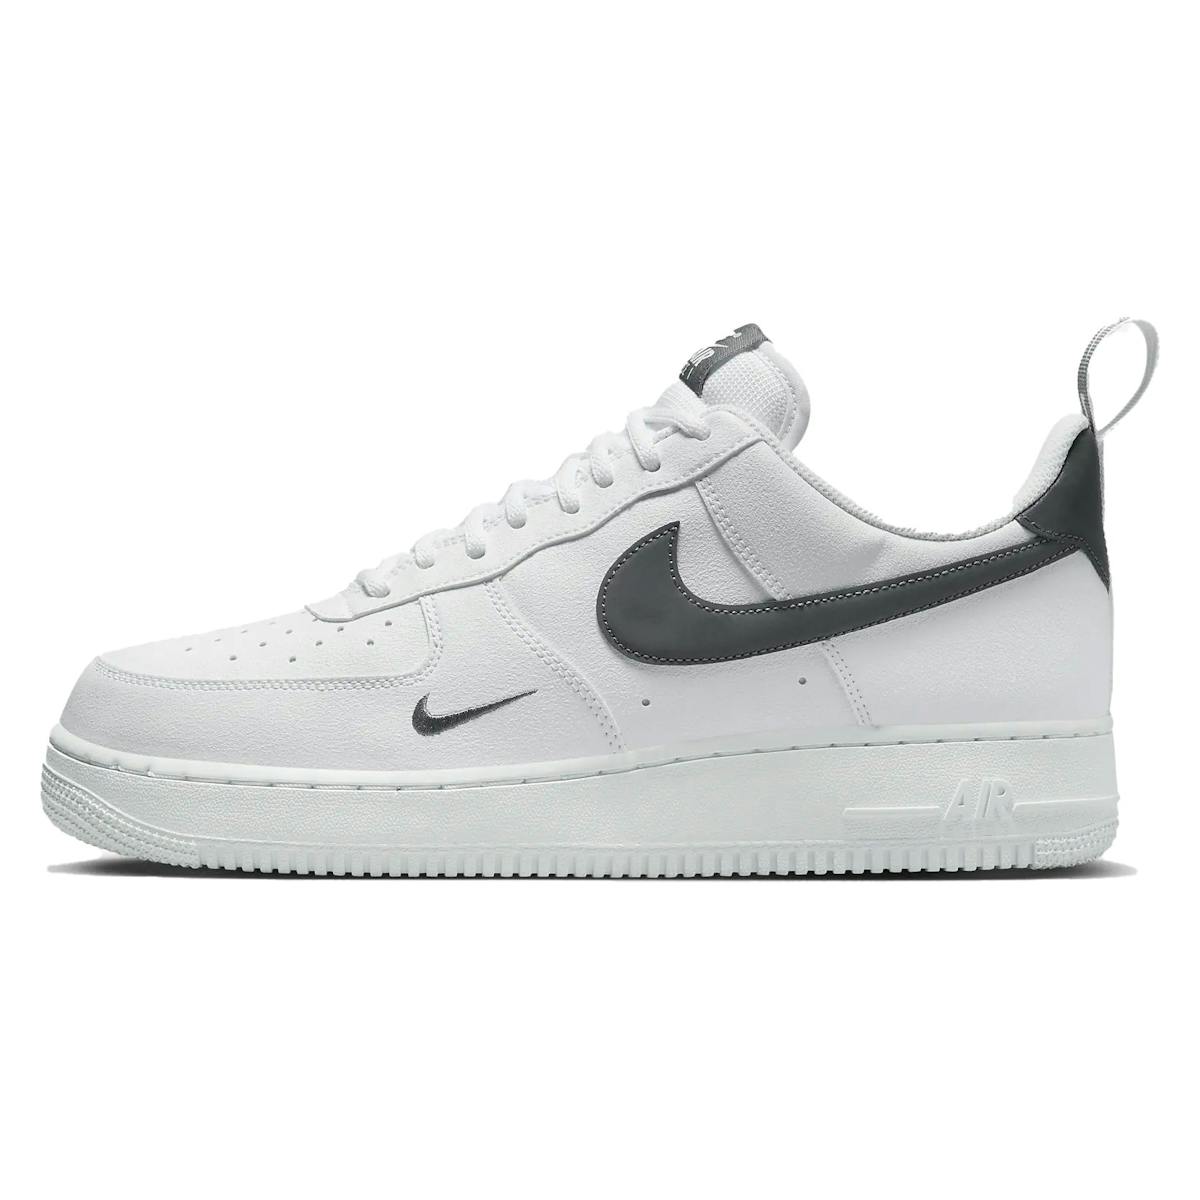 Nike Air Force 1 Low Heel Tab "White/Grey"